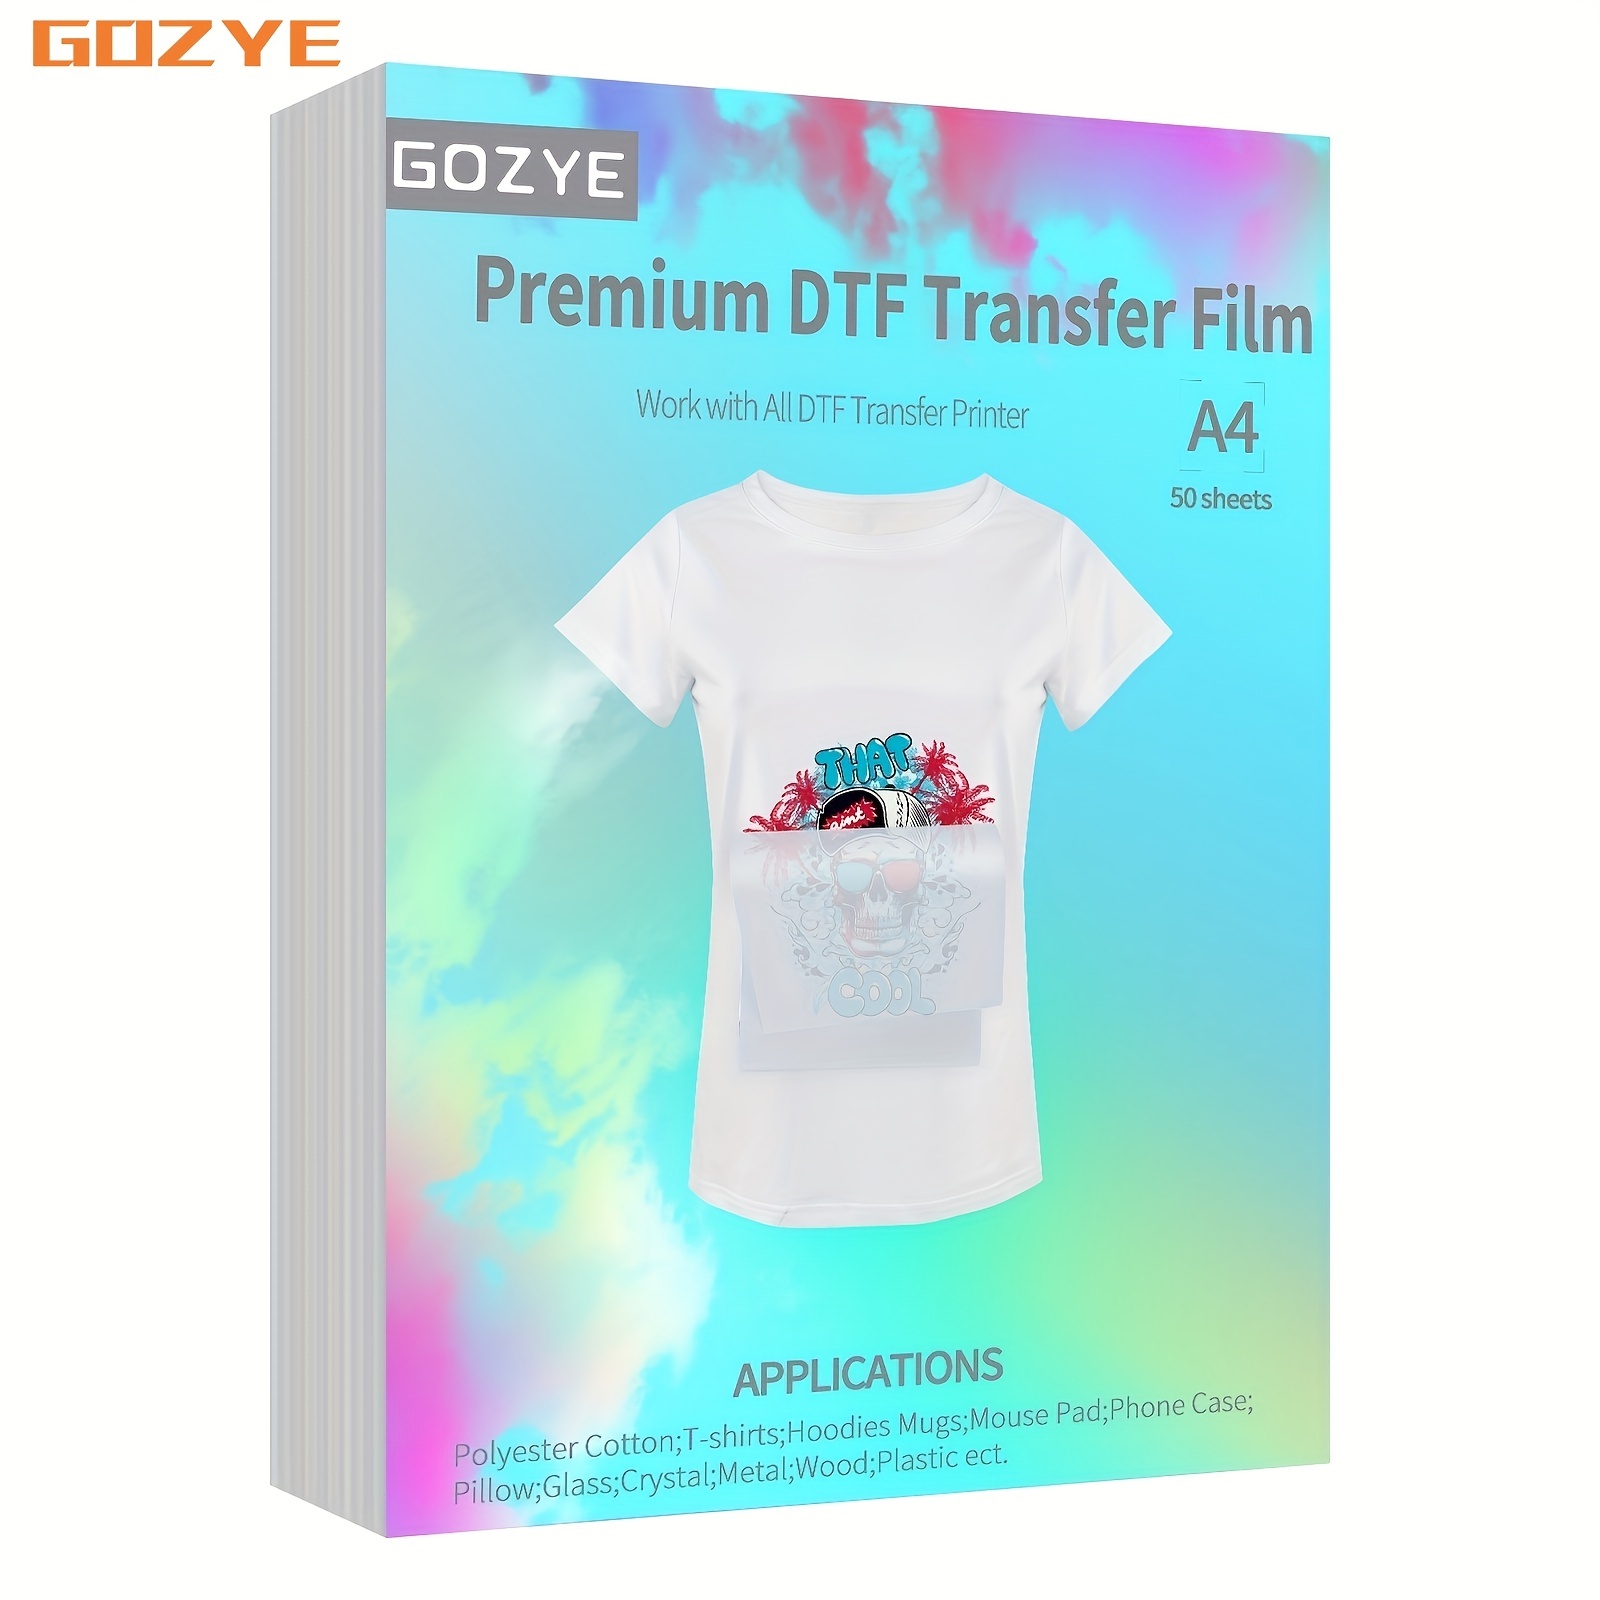 WinnerTransfer Inkjet Heat Transfer Paper For T Shirt Luminous Blue Iron  Paper For Clothing Transfer Printing Paper A5 10Sheets